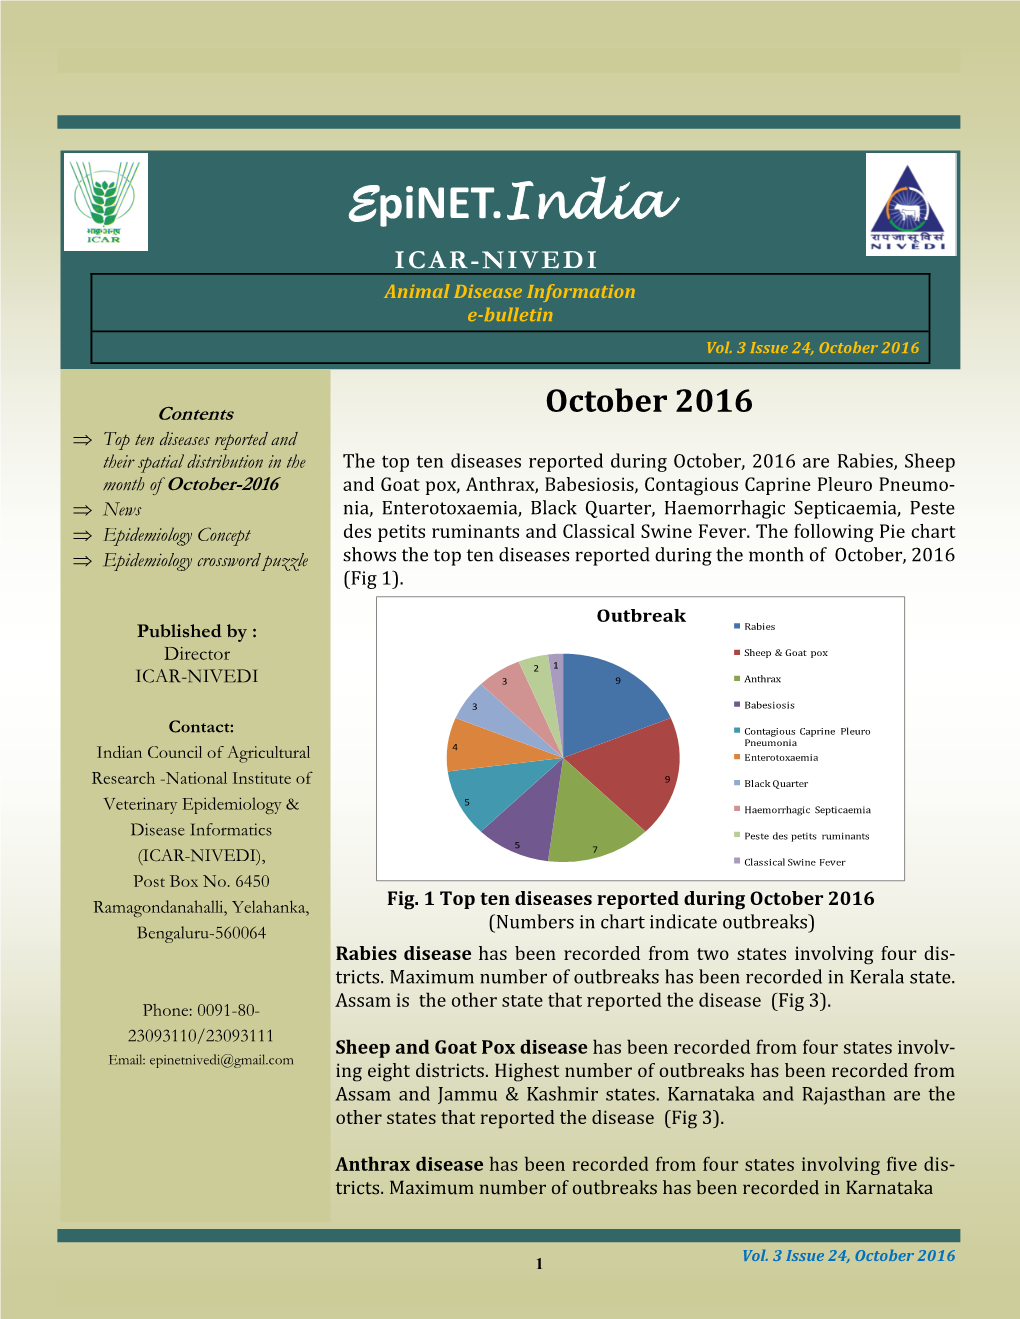 Epinet.India ICAR-NIVEDI Animal Disease Information E-Bulletin Vol